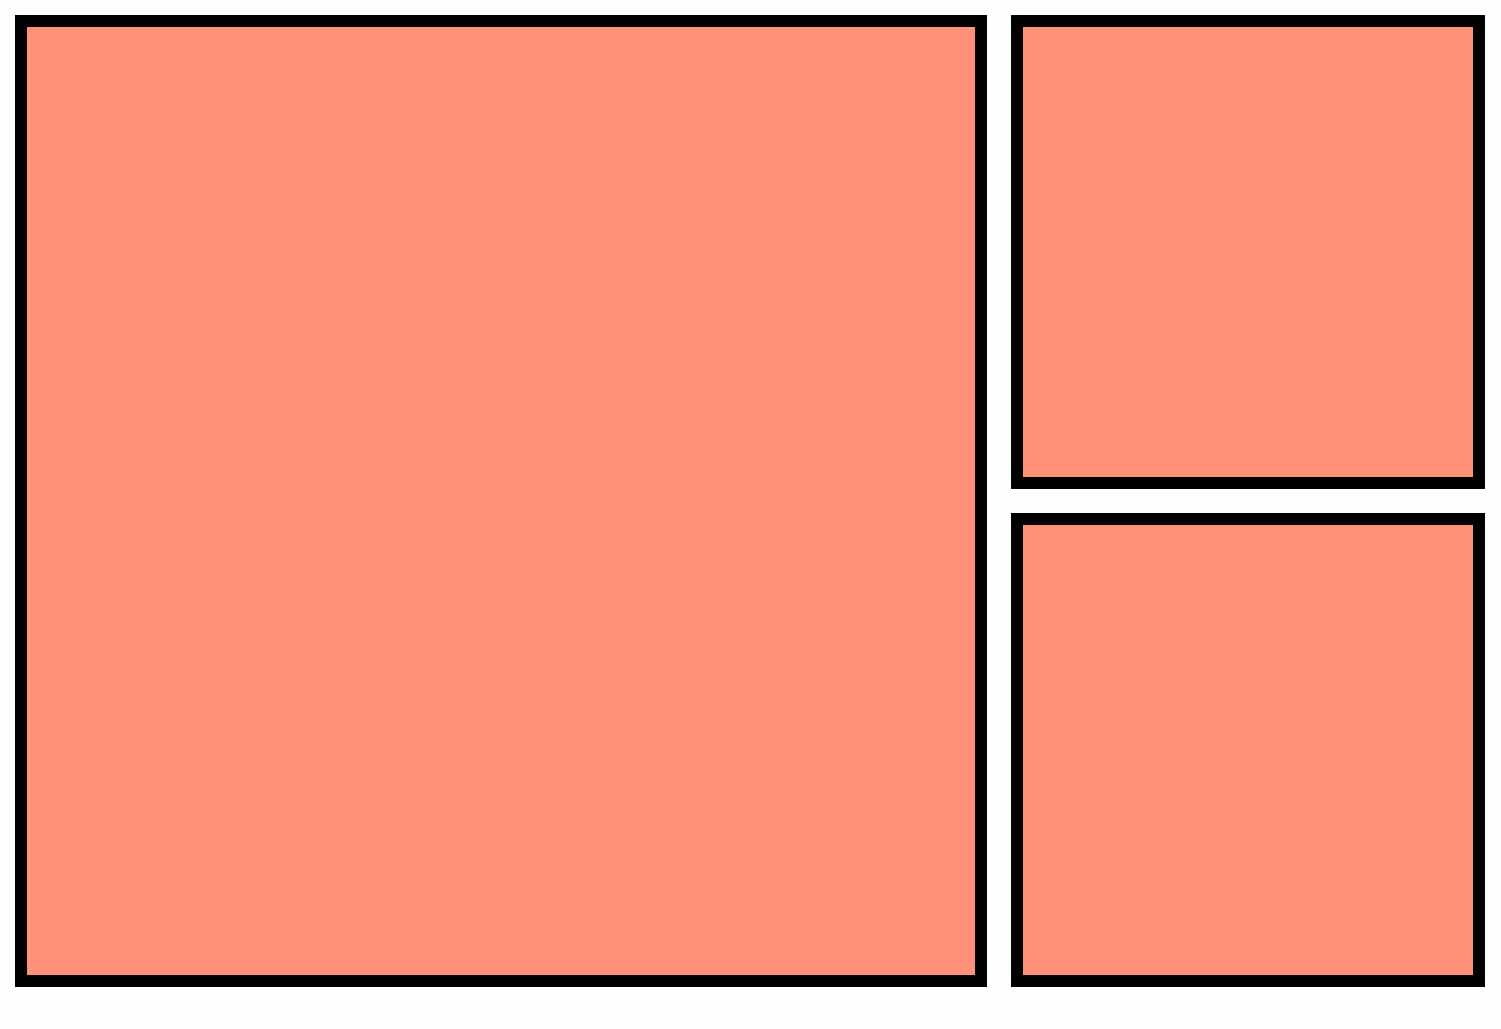 Modular grid layout